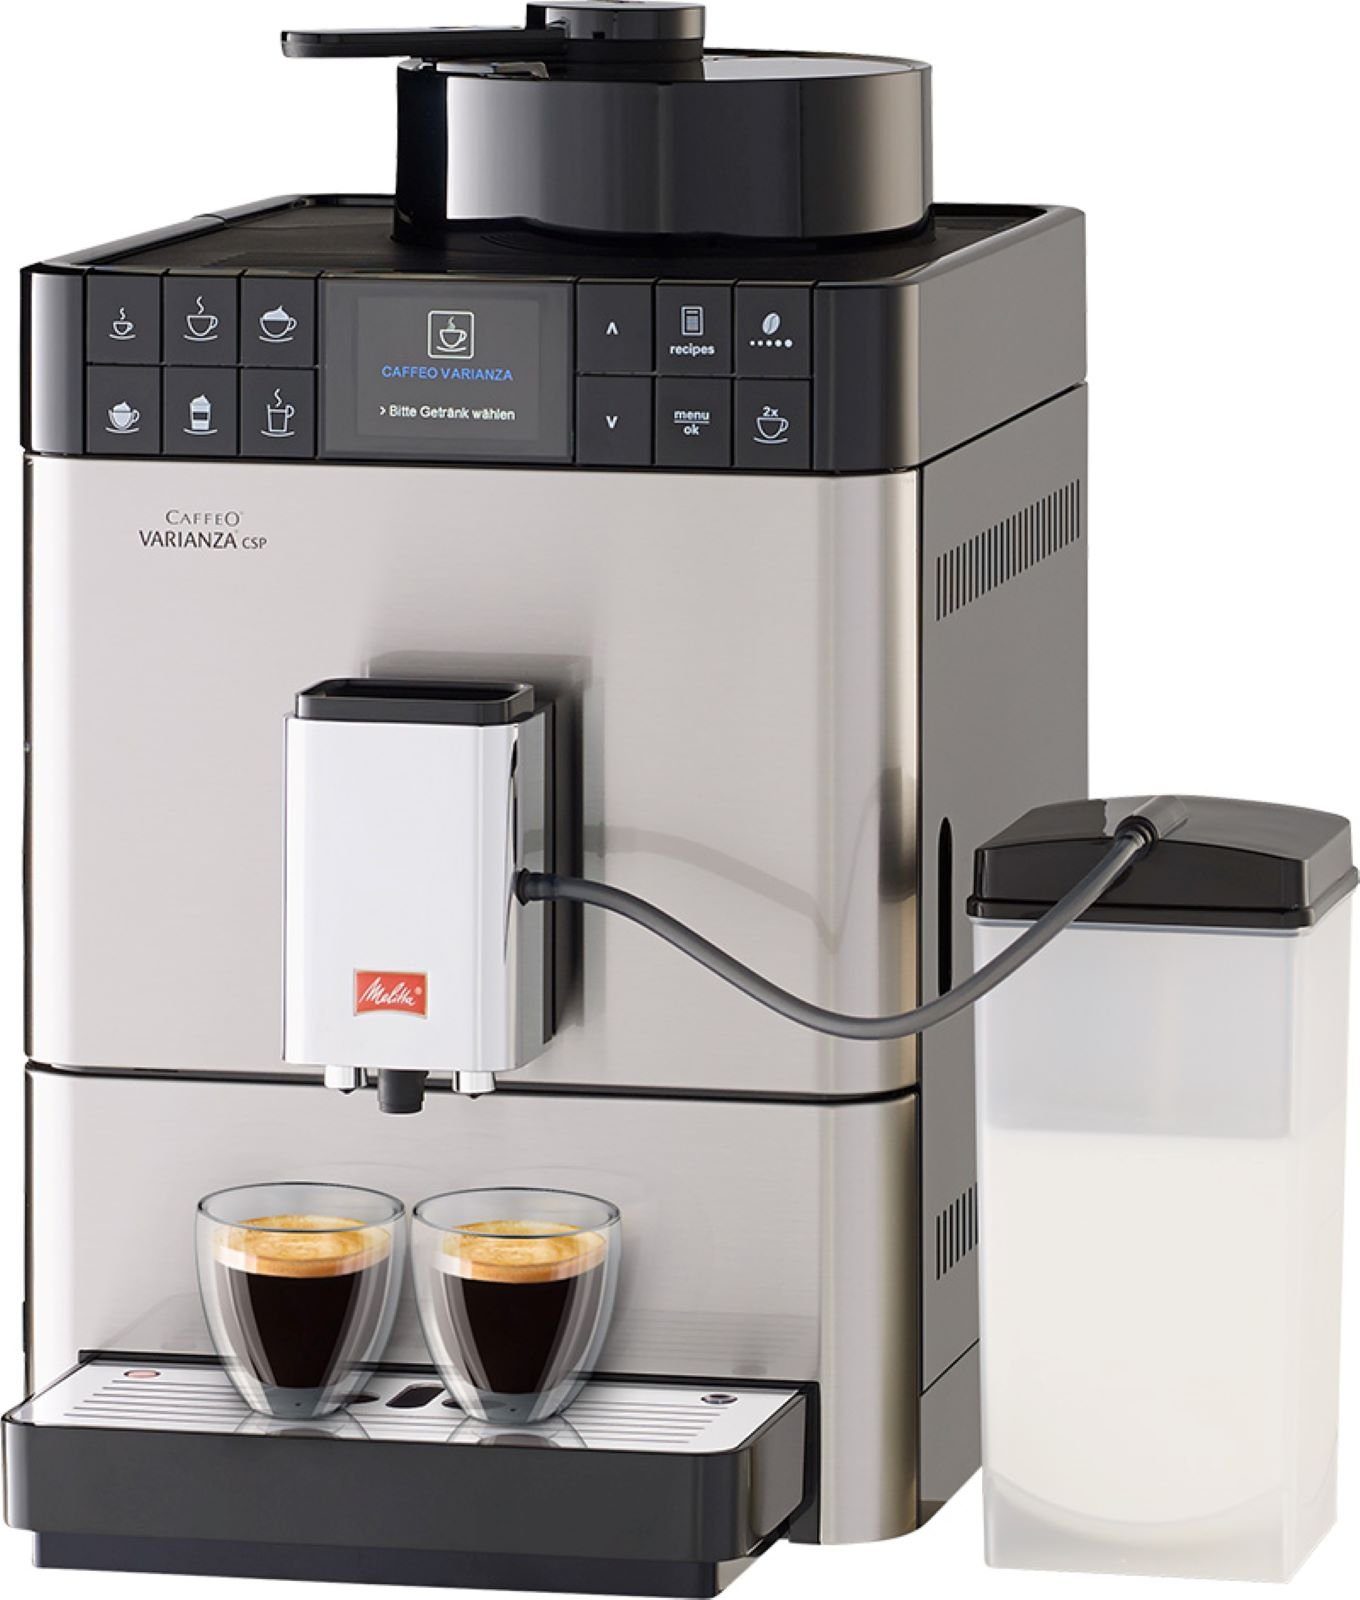 Melitta Kaffeevollautomat F580-100 Varianza CSP Edelstahl